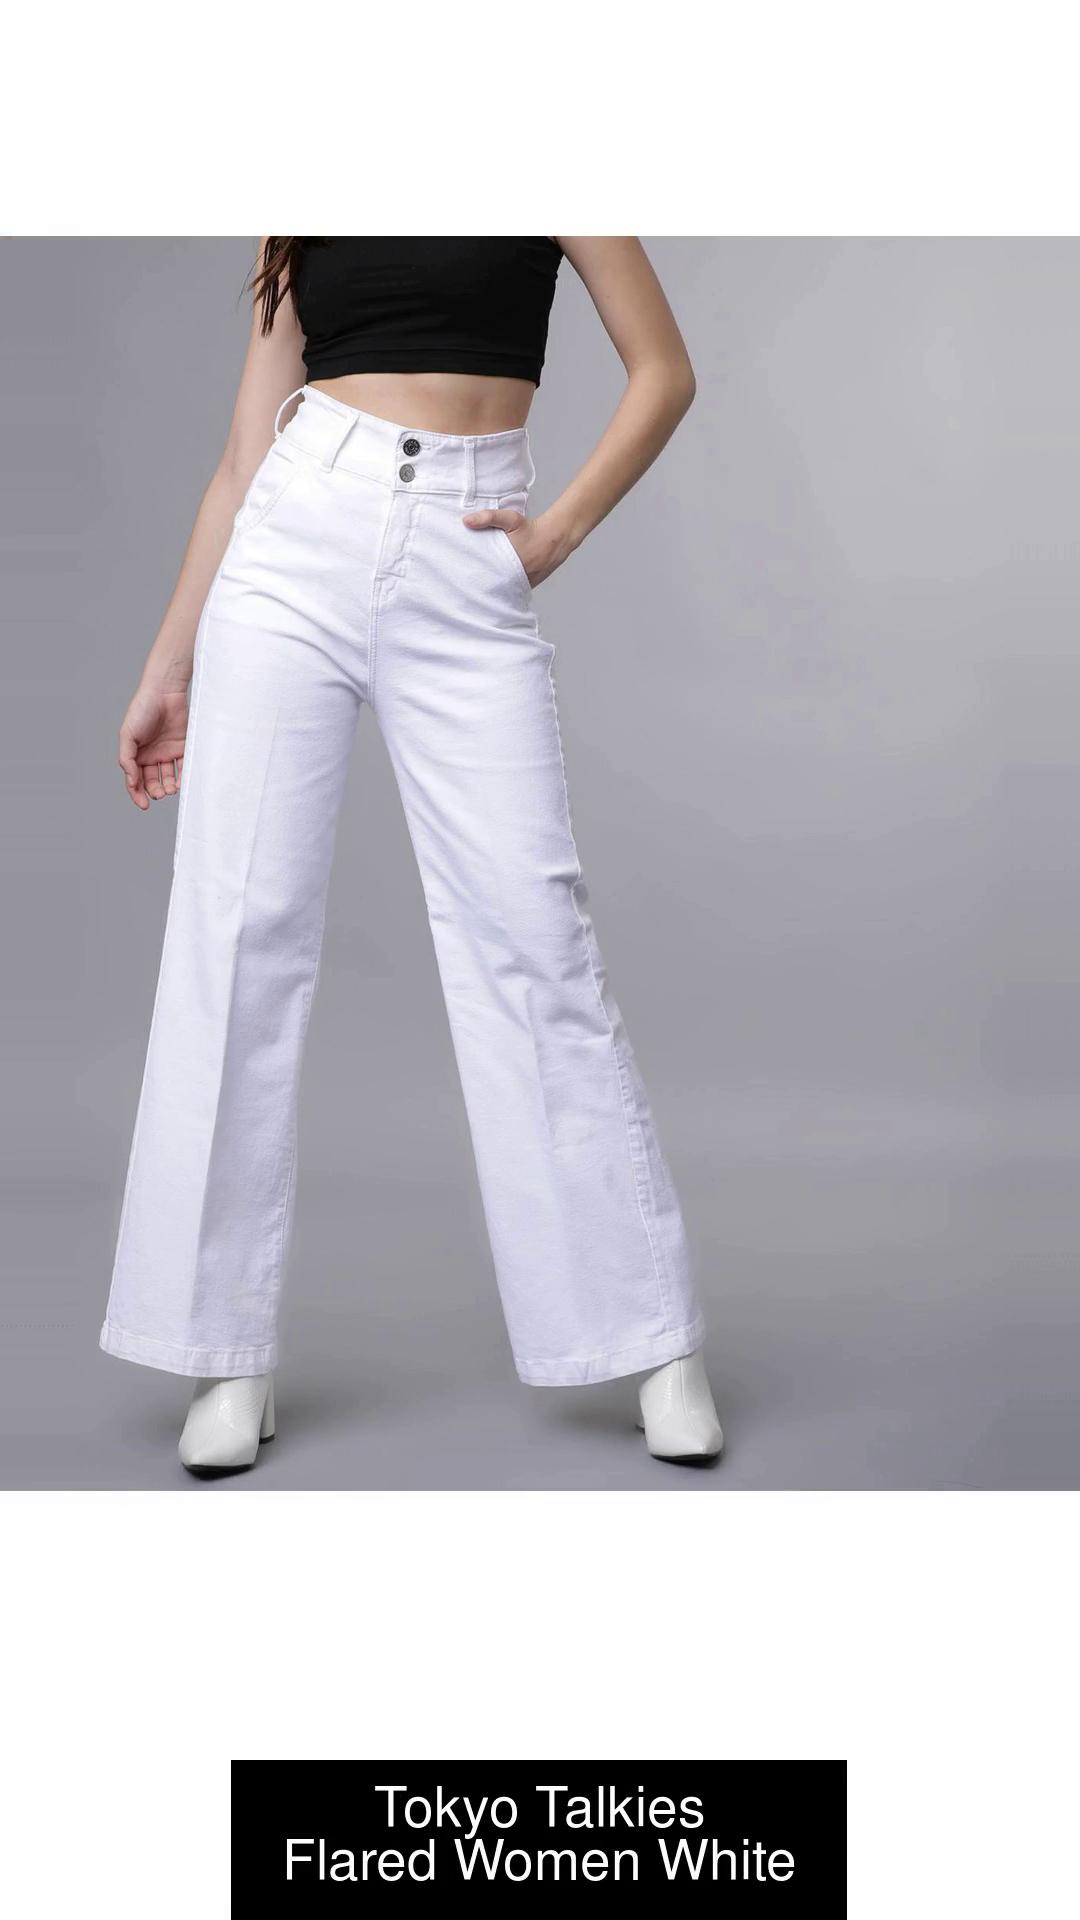 Tokyo Talkies Flared Women White Jeans